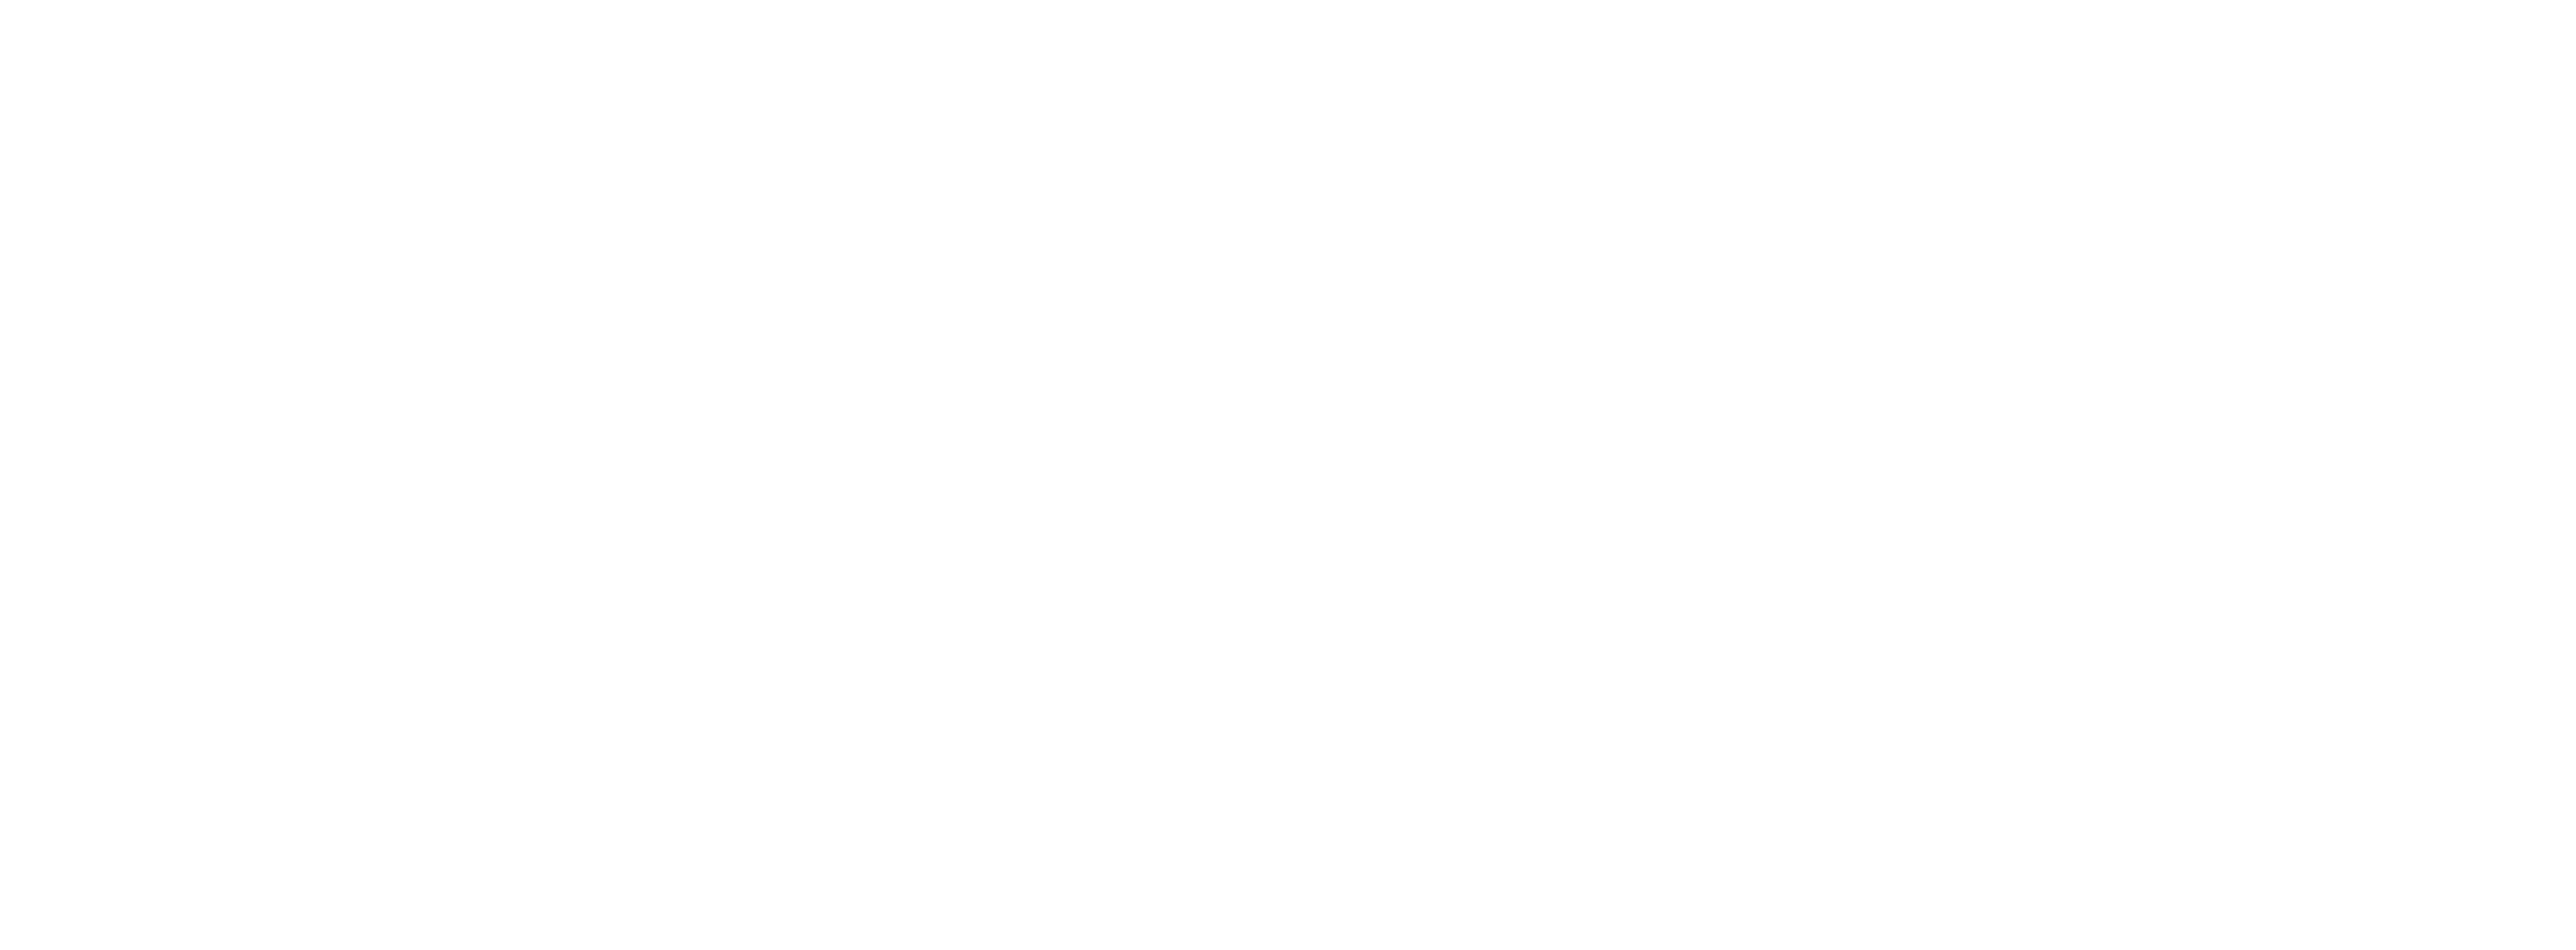 Metropolitan Madison @ Realty Executives Cooper Spransy